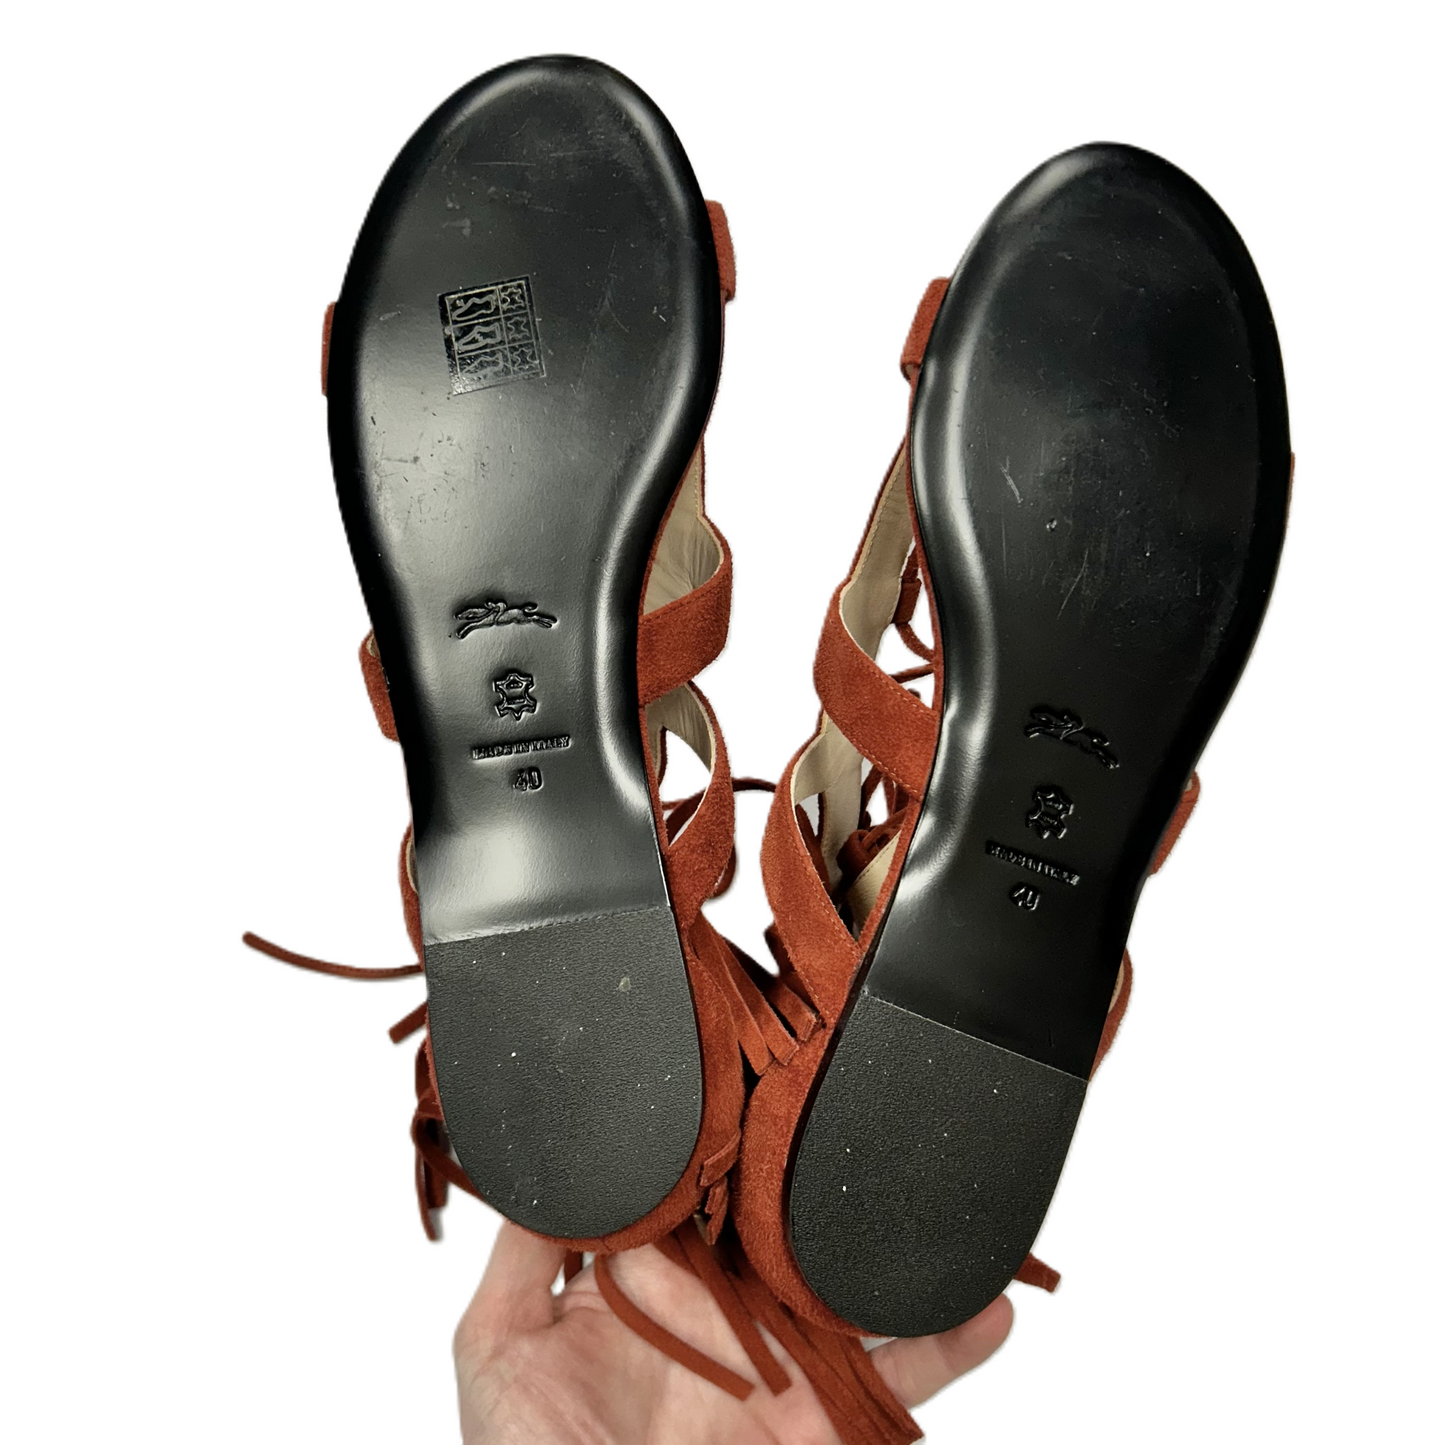 Sandals Designer By Longchamp  Size: 9.5